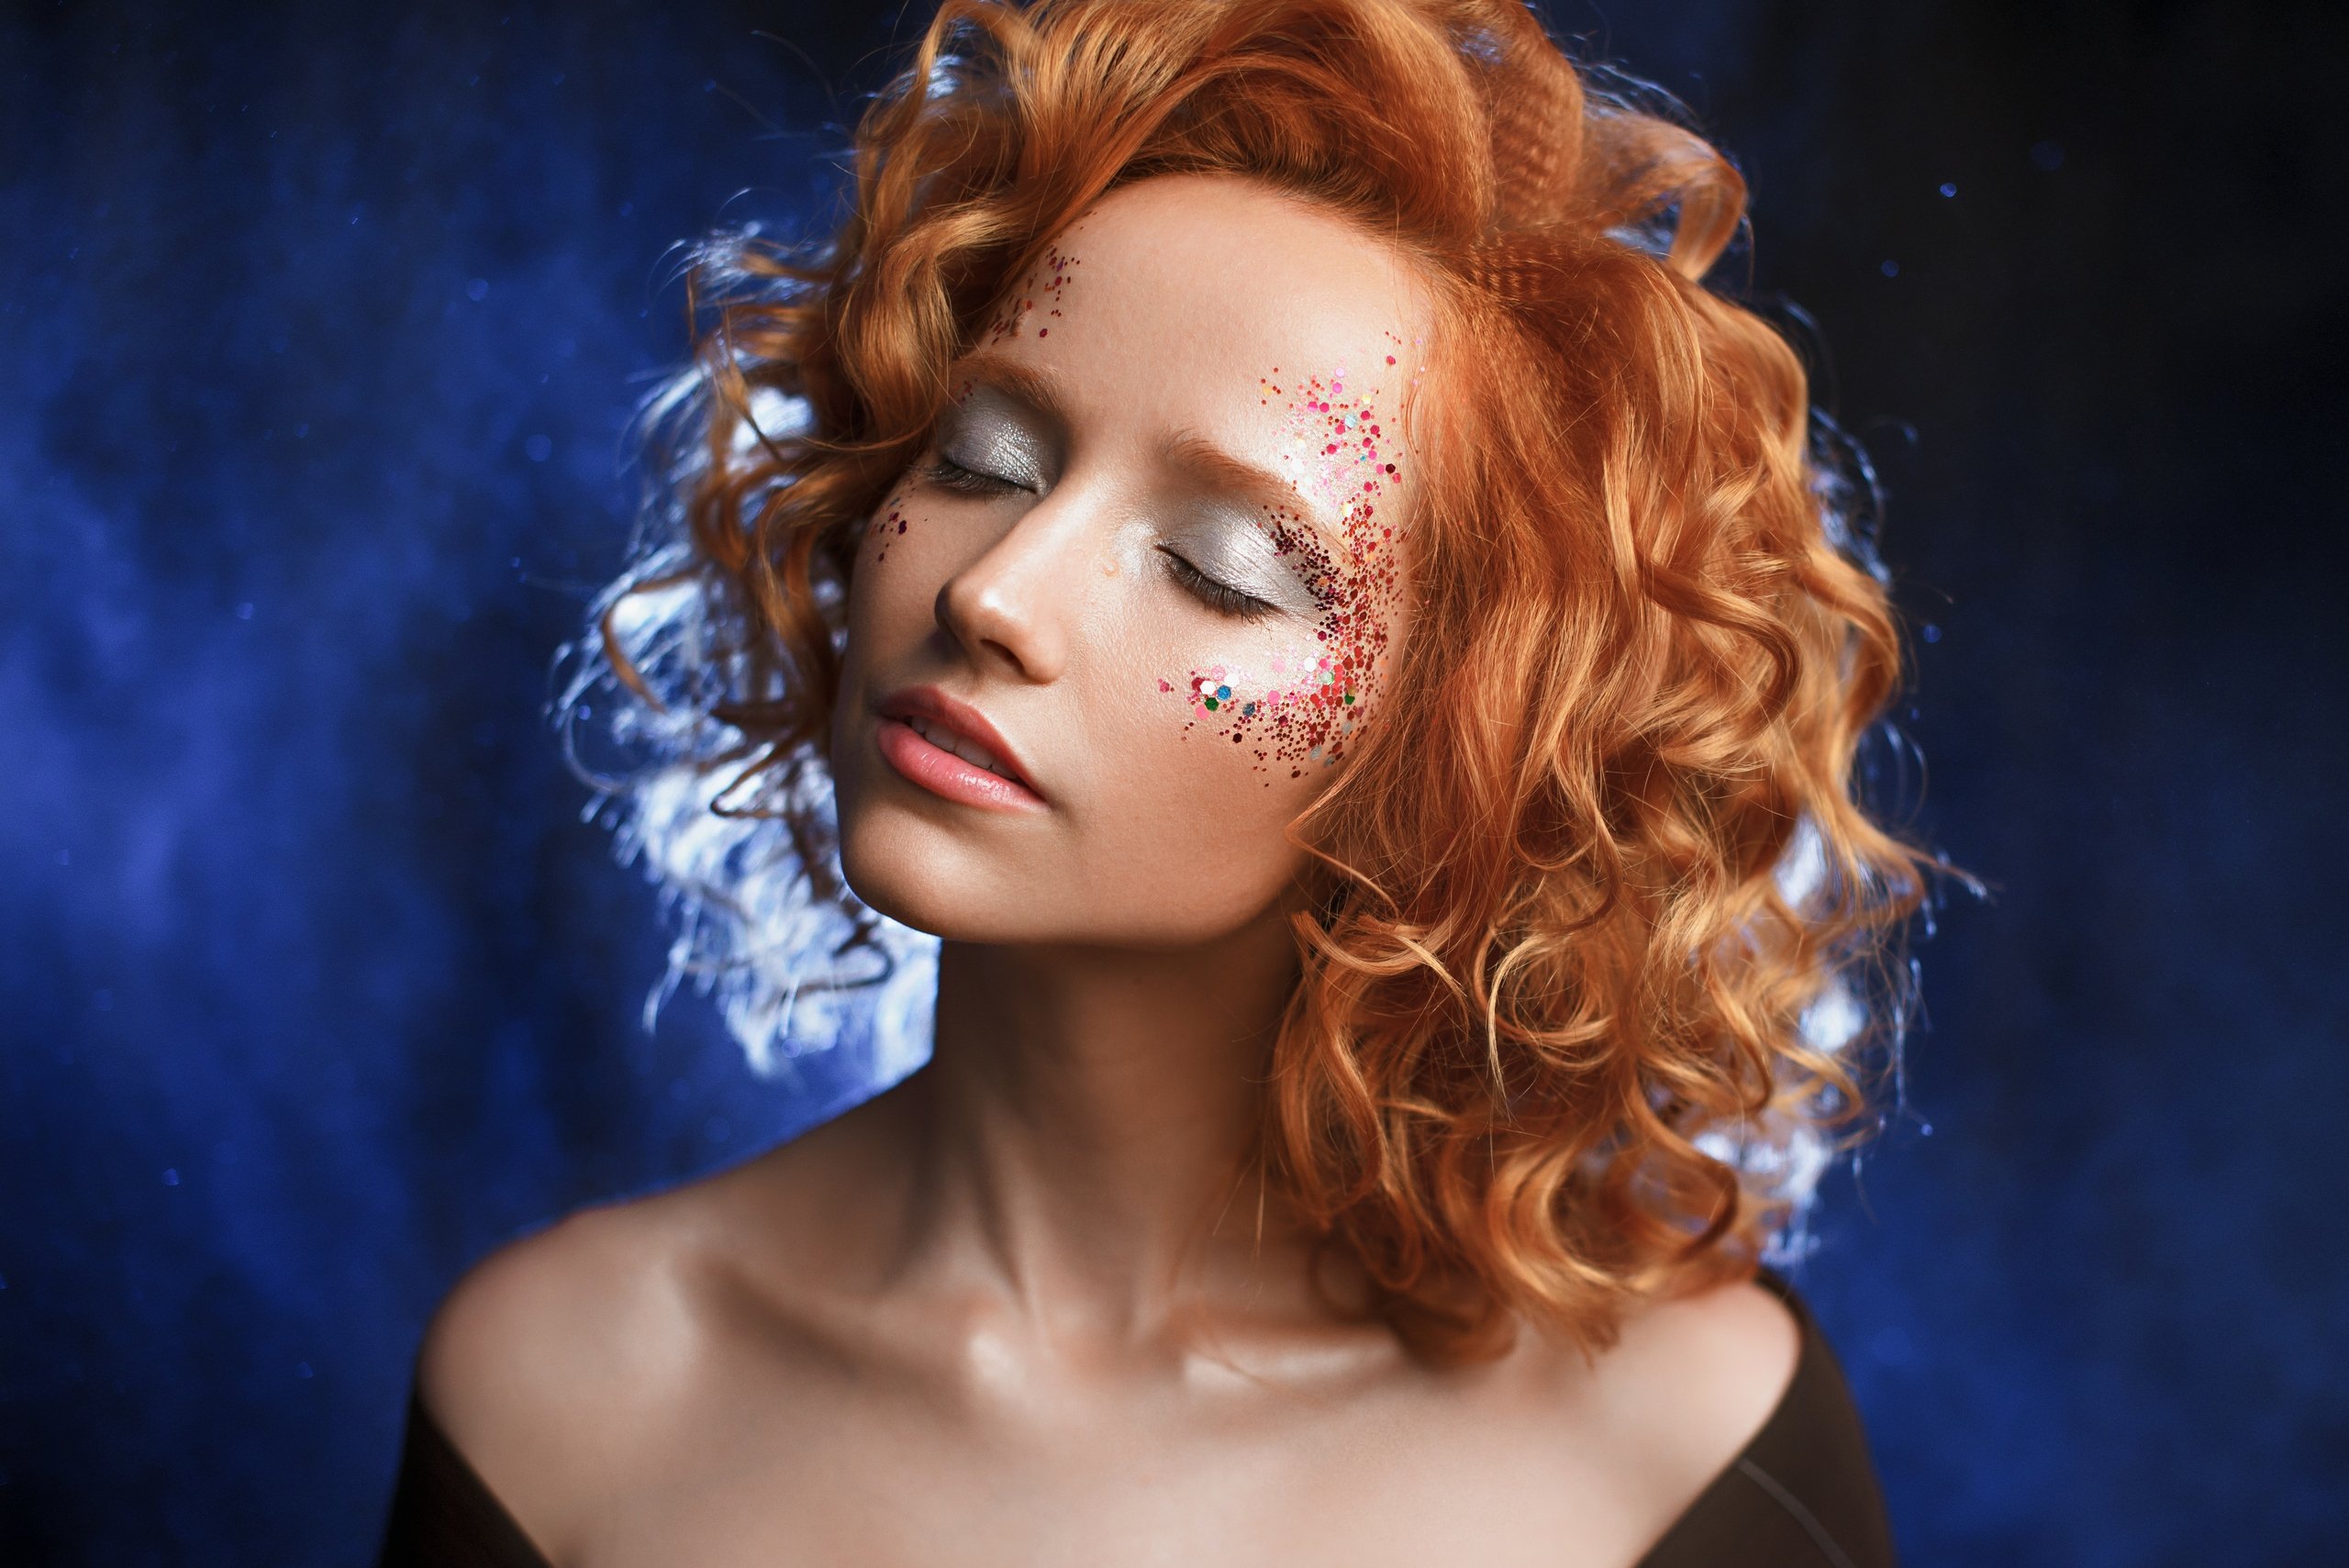 People 2560x1709 Pavel Cherepko women redhead glamour glitter portrait closeup model